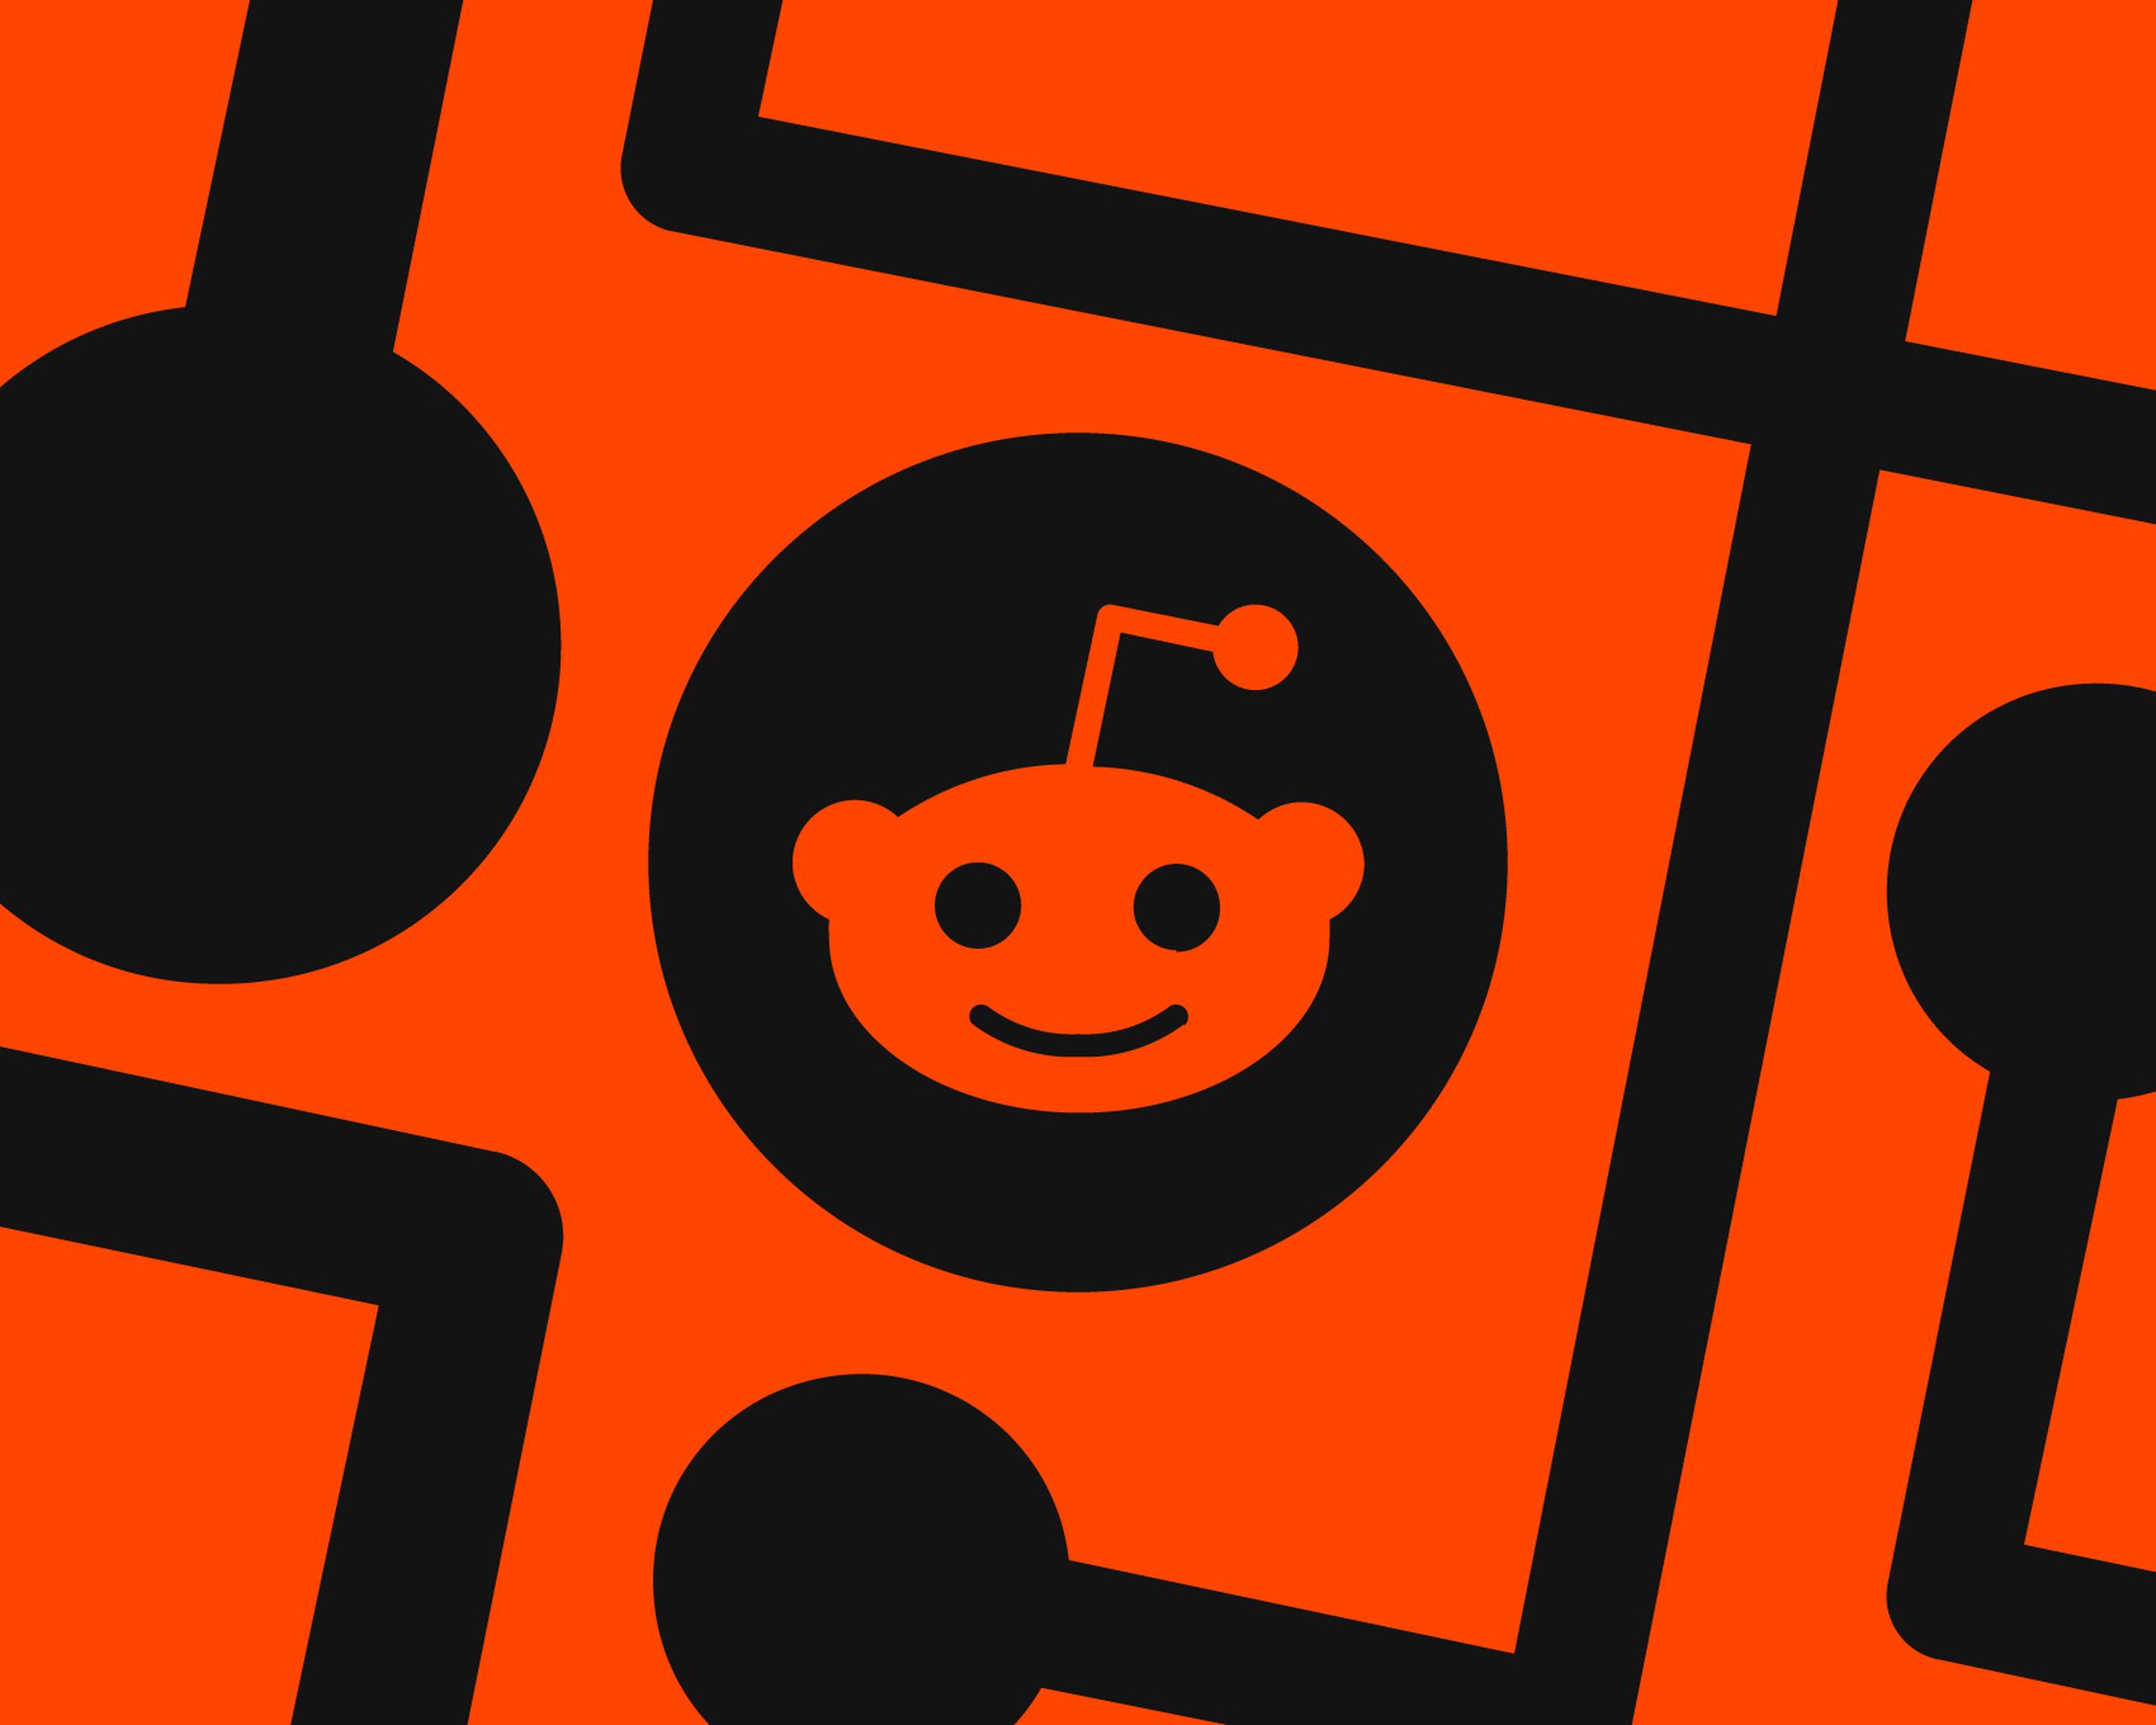 The Reddit logo over an orange and black background